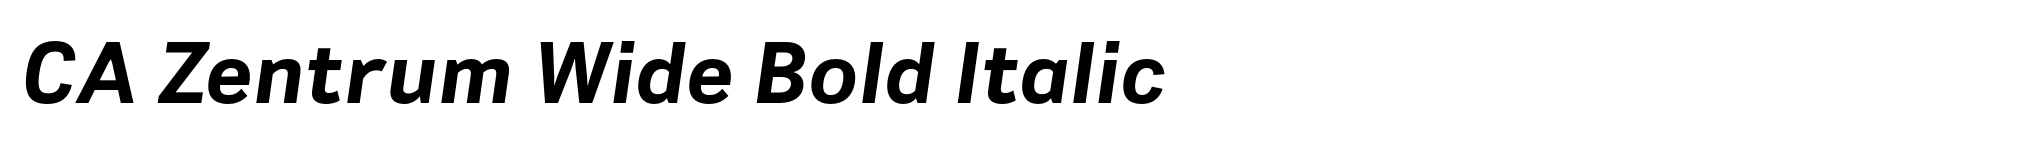 CA Zentrum Wide Bold Italic image